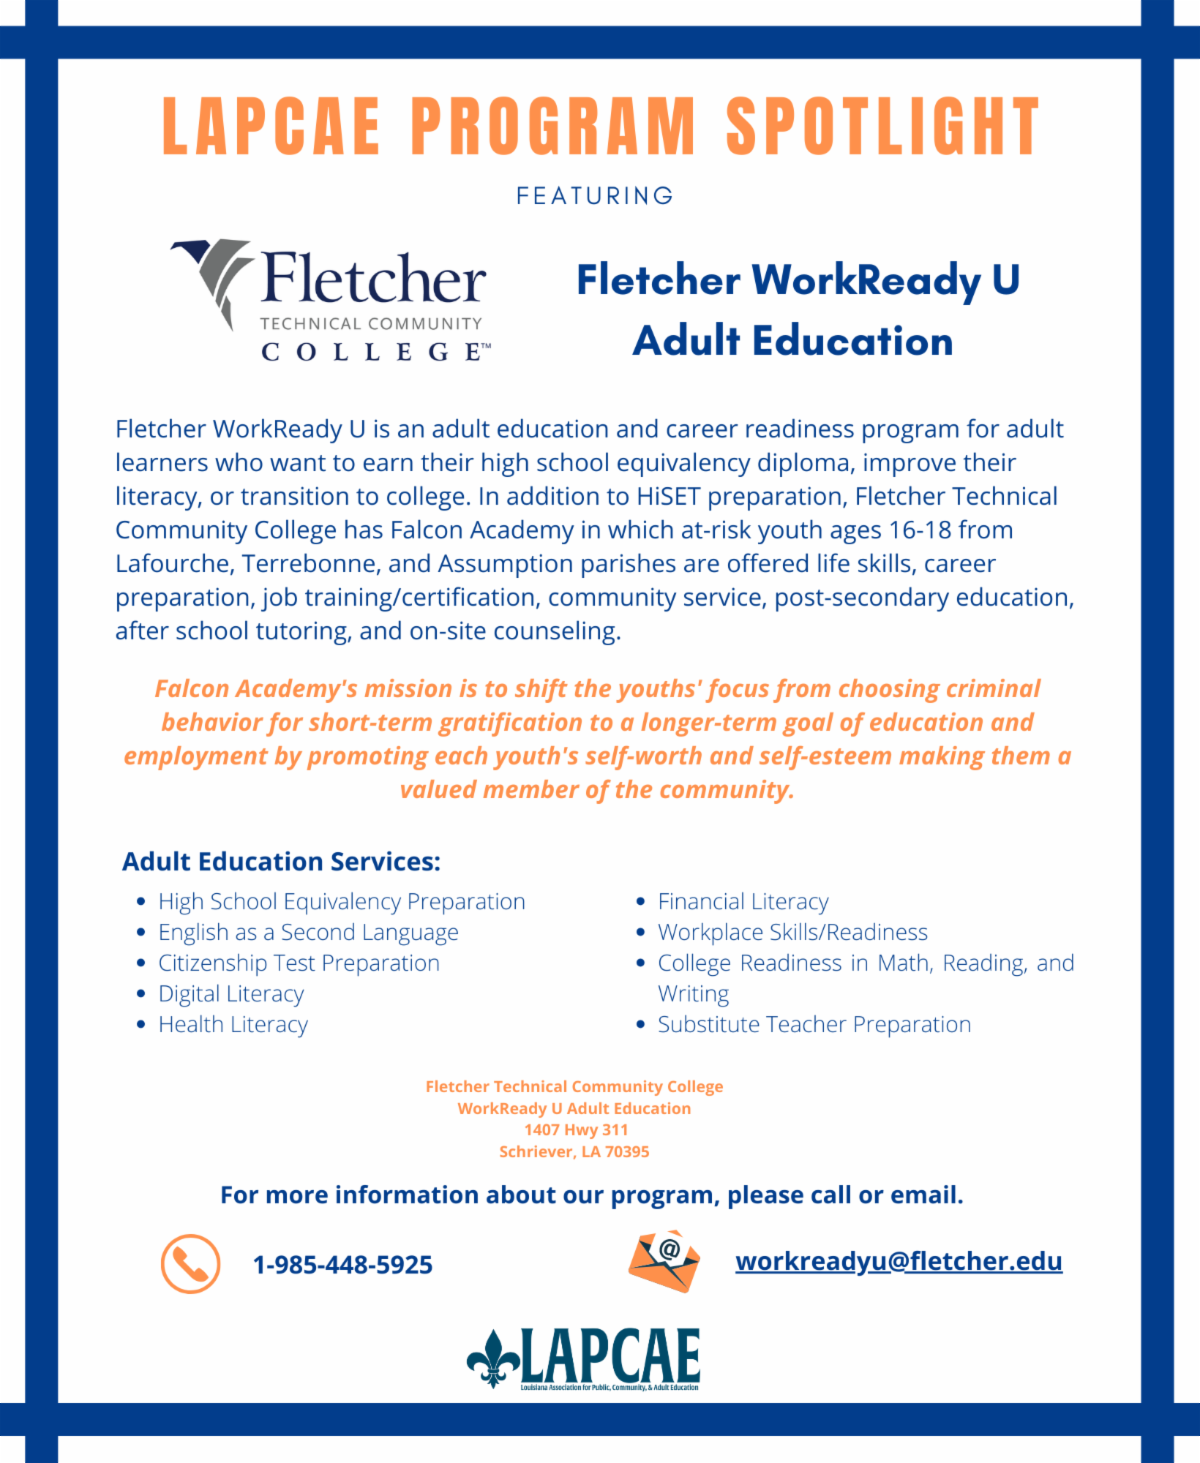 Fletcher Technical Community College program spotlight